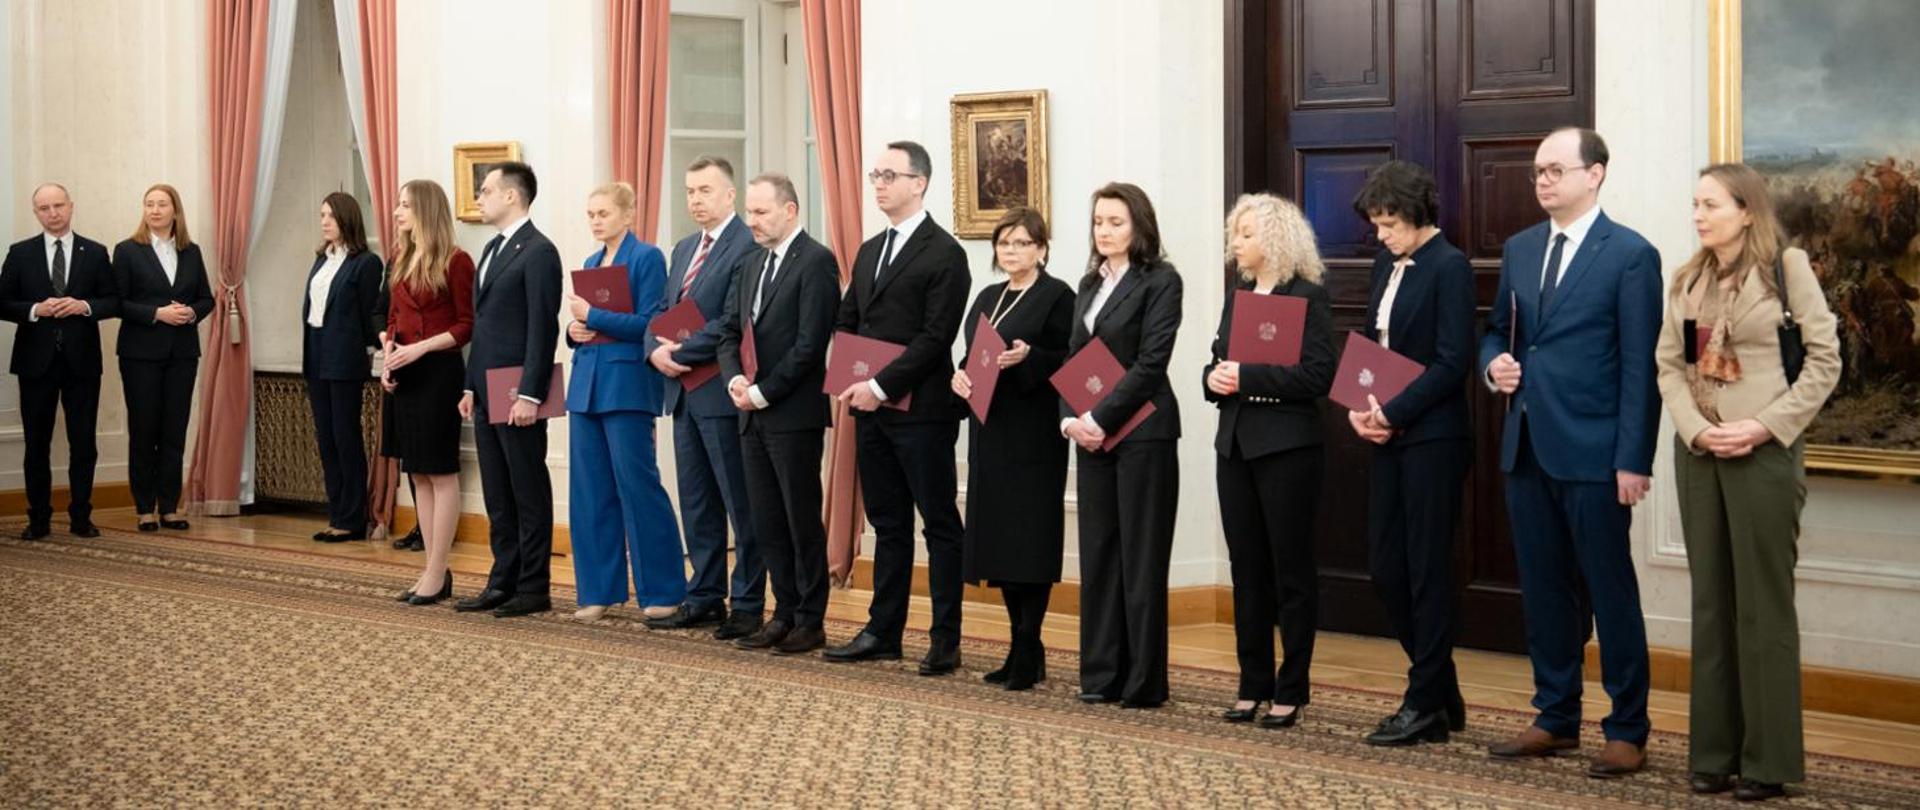 Minister Agnieszka Dziemianowicz-Bąk and Deputy Minister Sebastian Gajewski appointed to the Social Dialogue Council